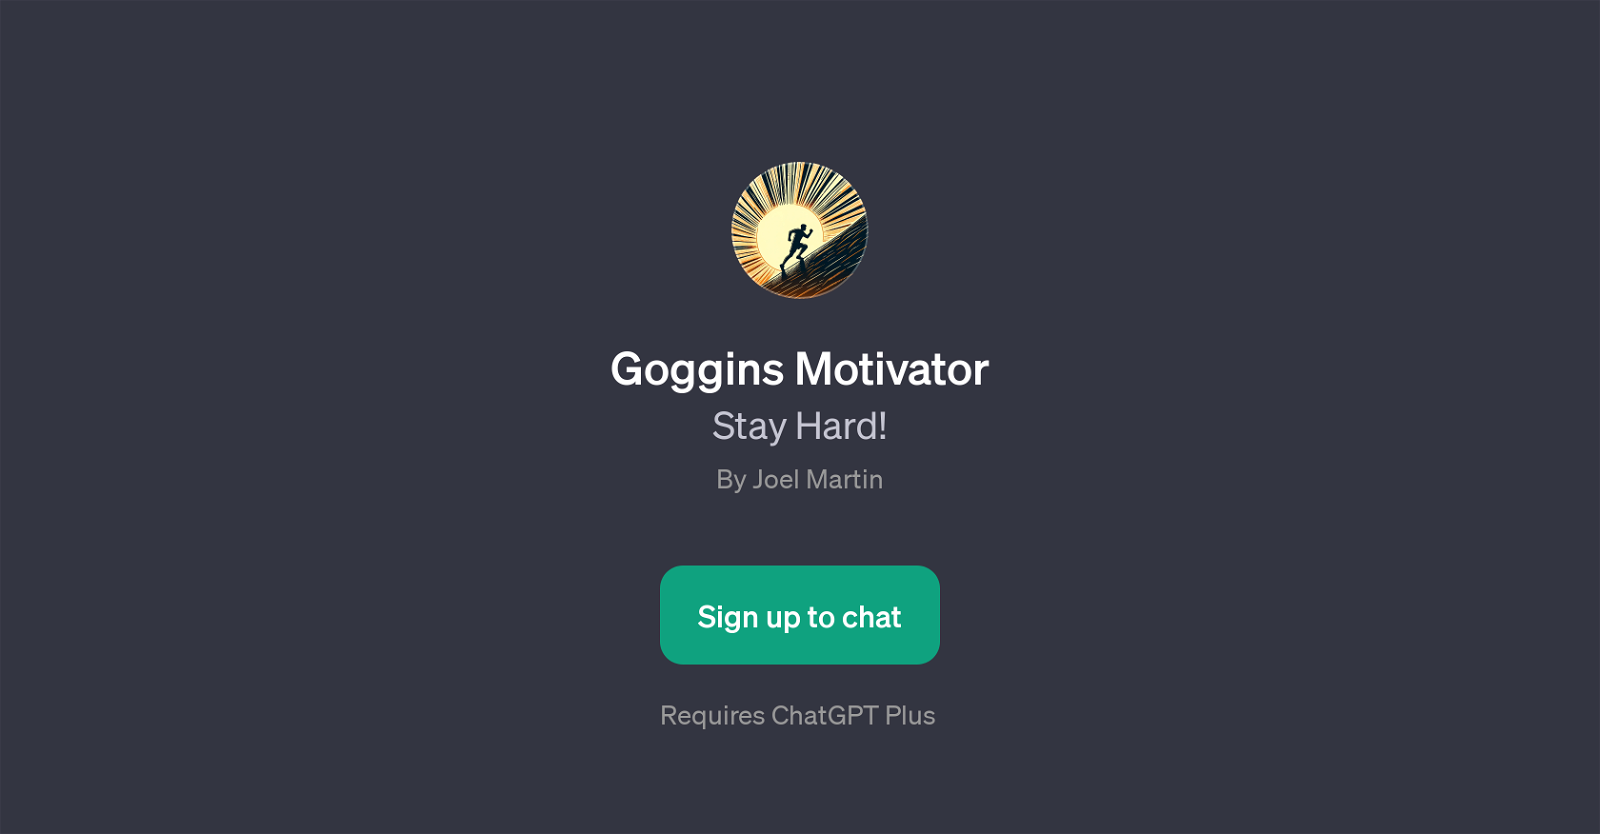 Goggins Motivator website